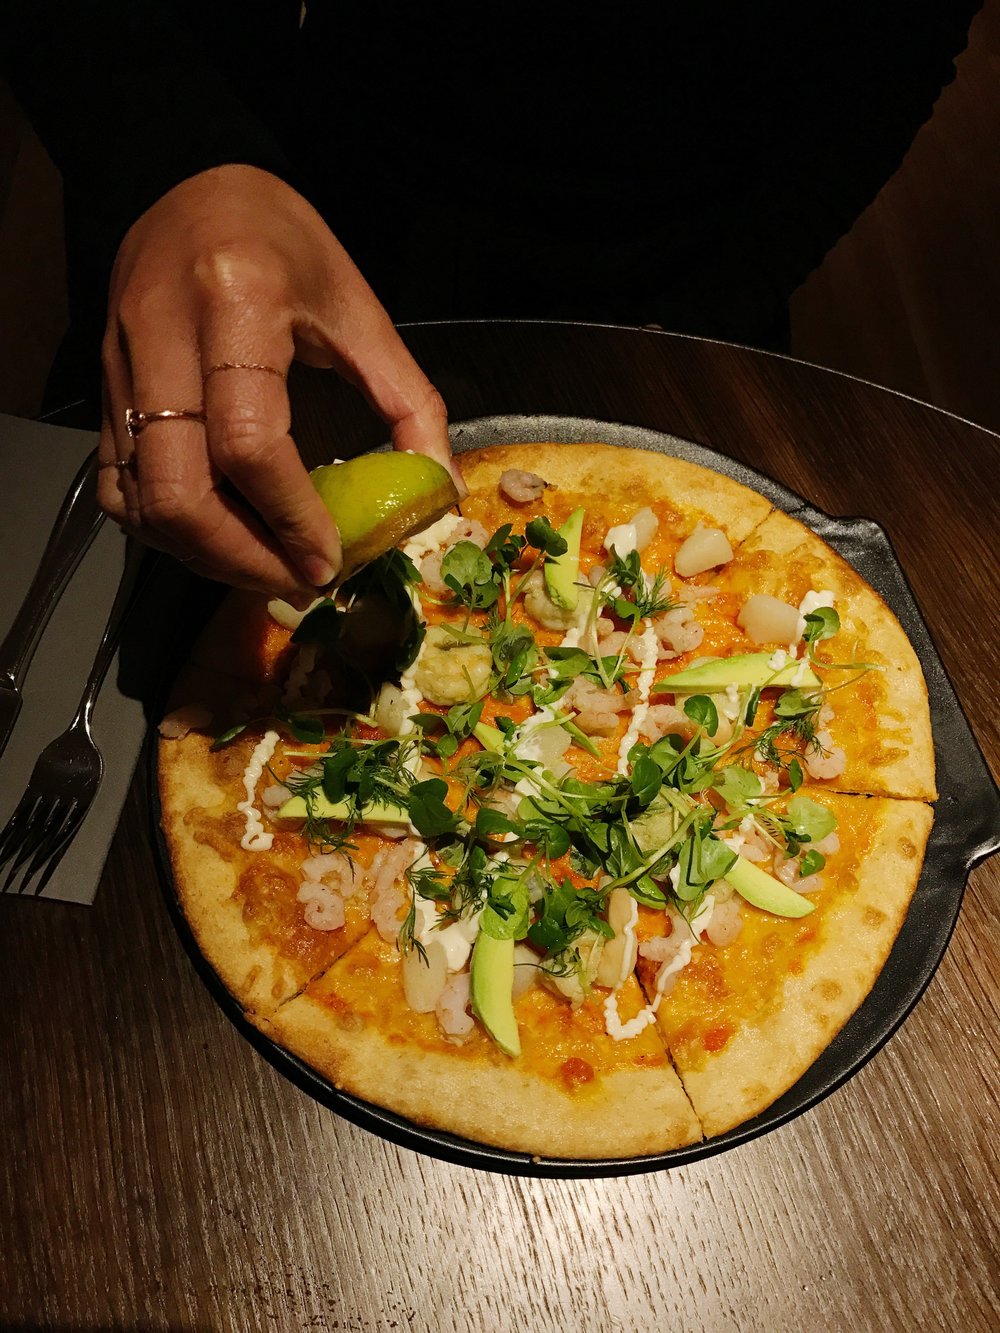 Pictured: Shellfish Pizza (Marinated shellfish, avocado, and herb salad)